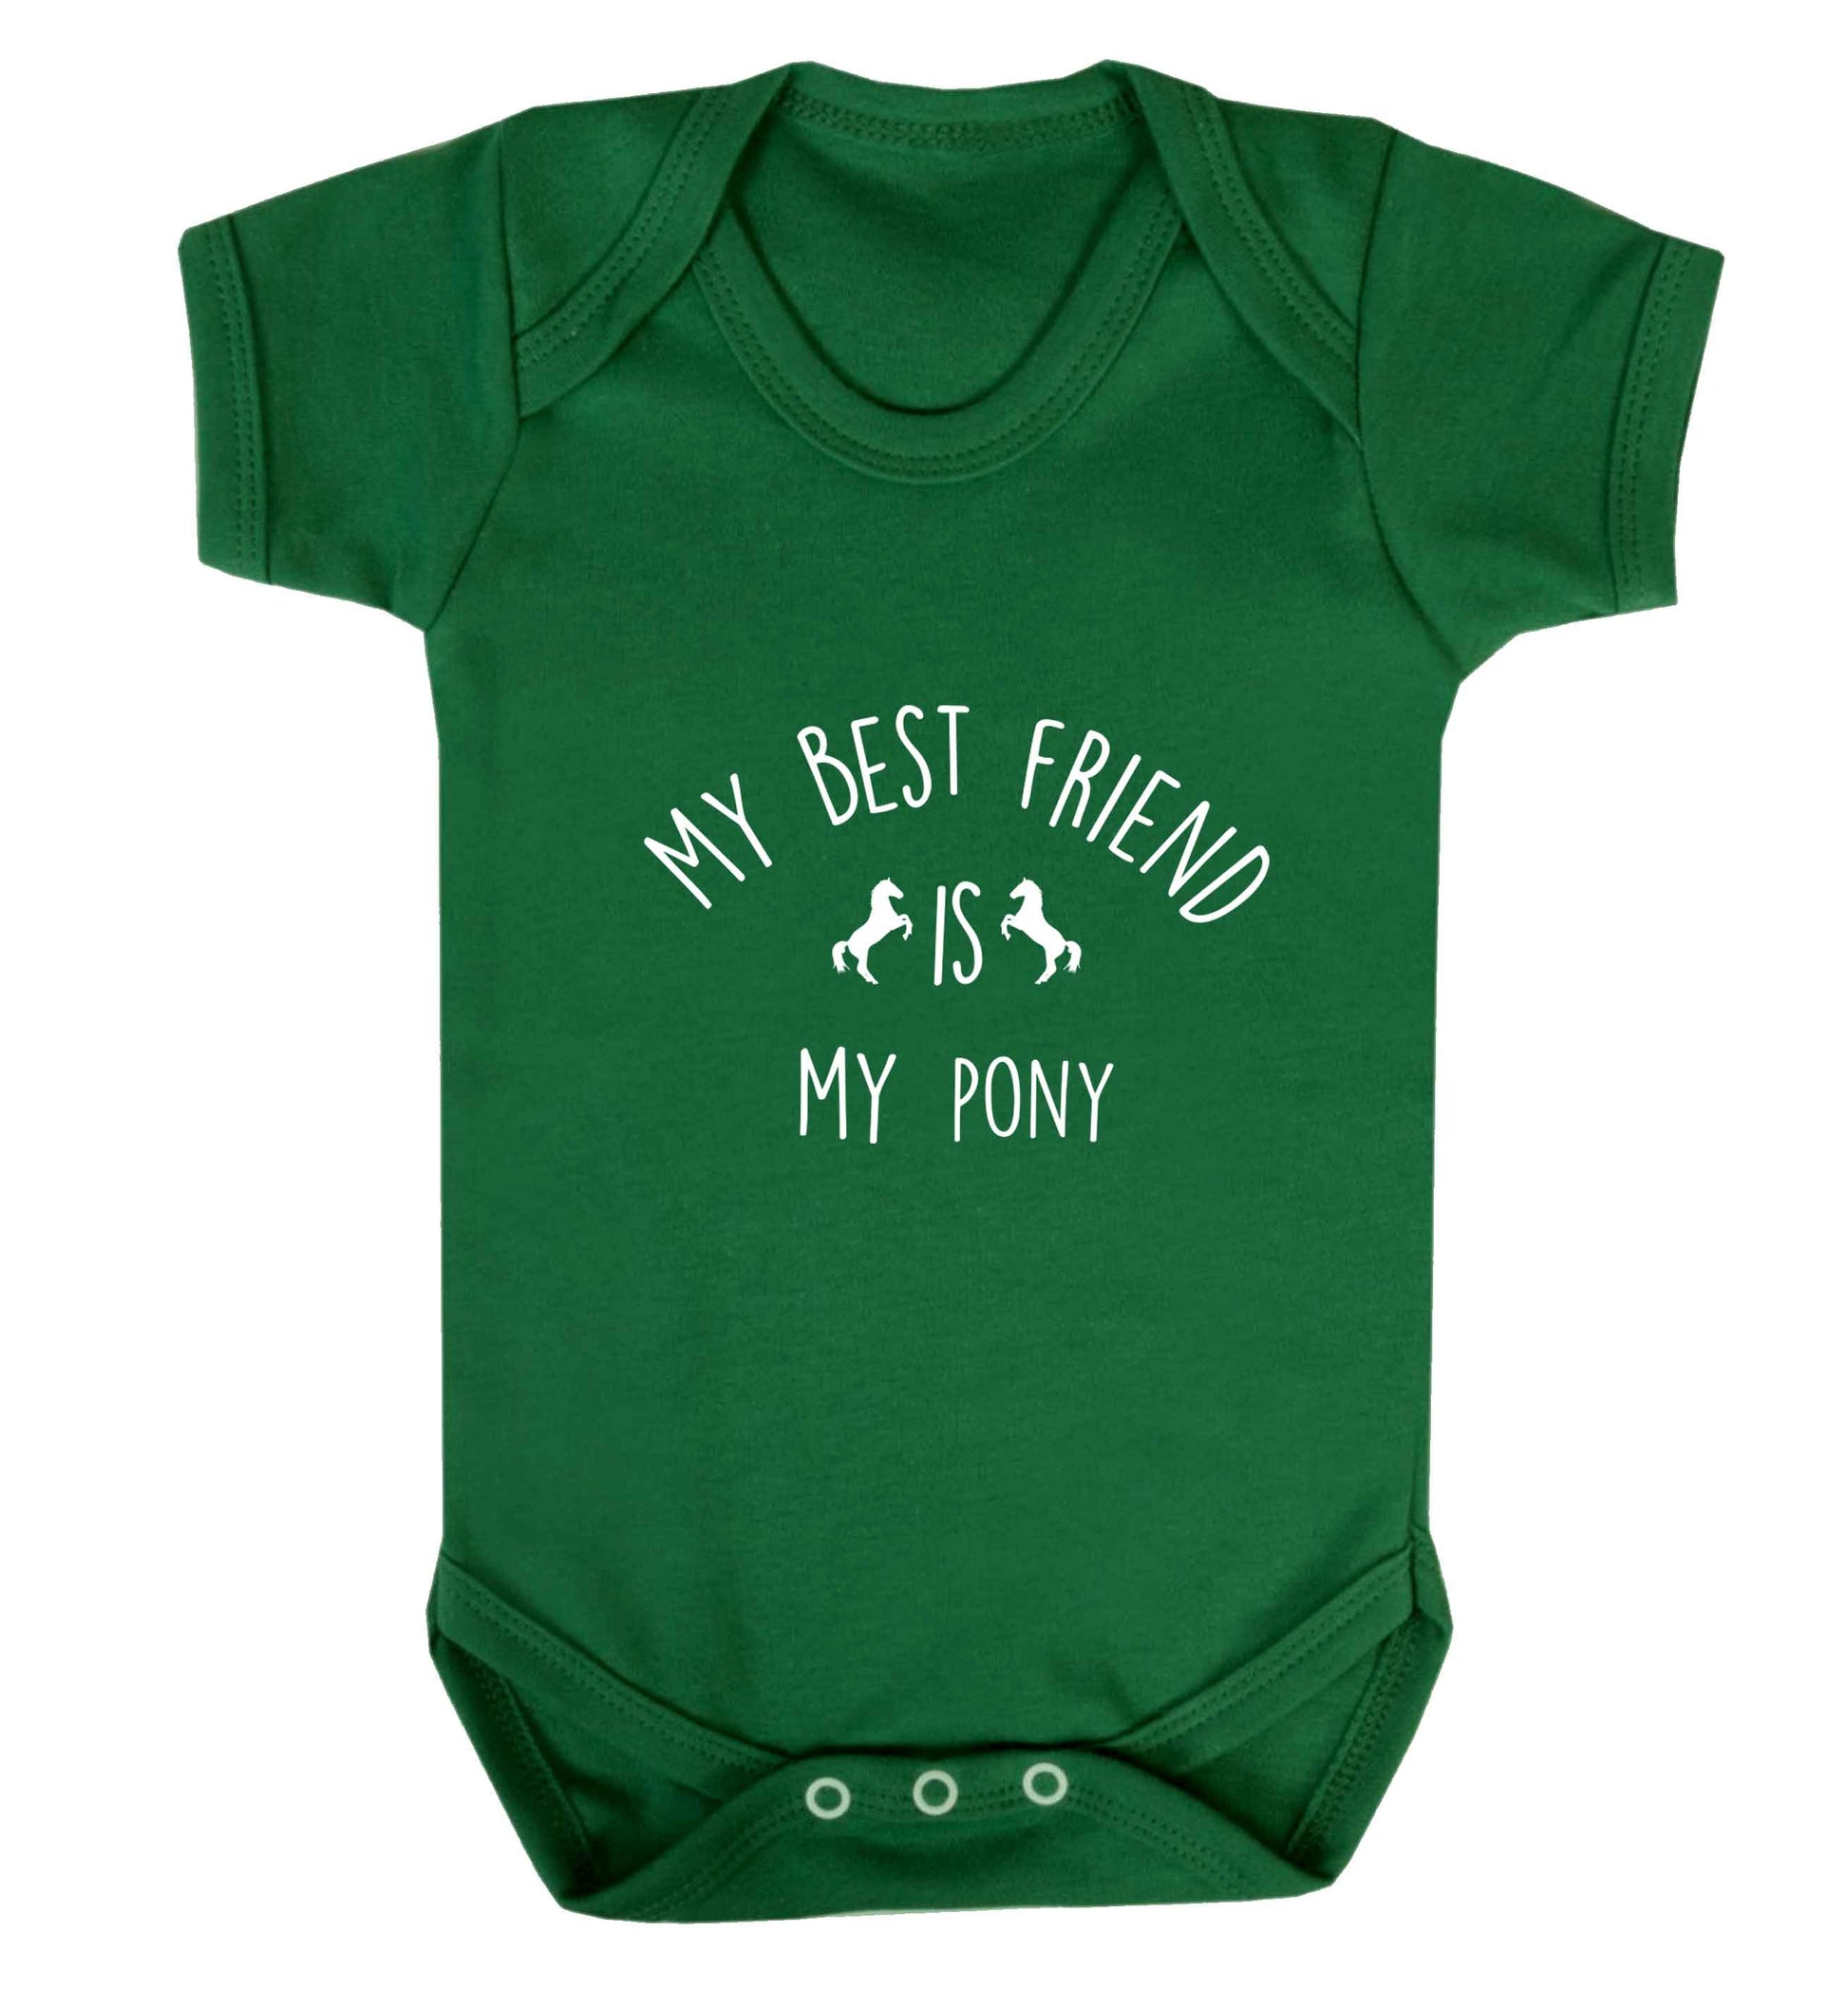 My best friend is my pony baby vest green 18-24 months